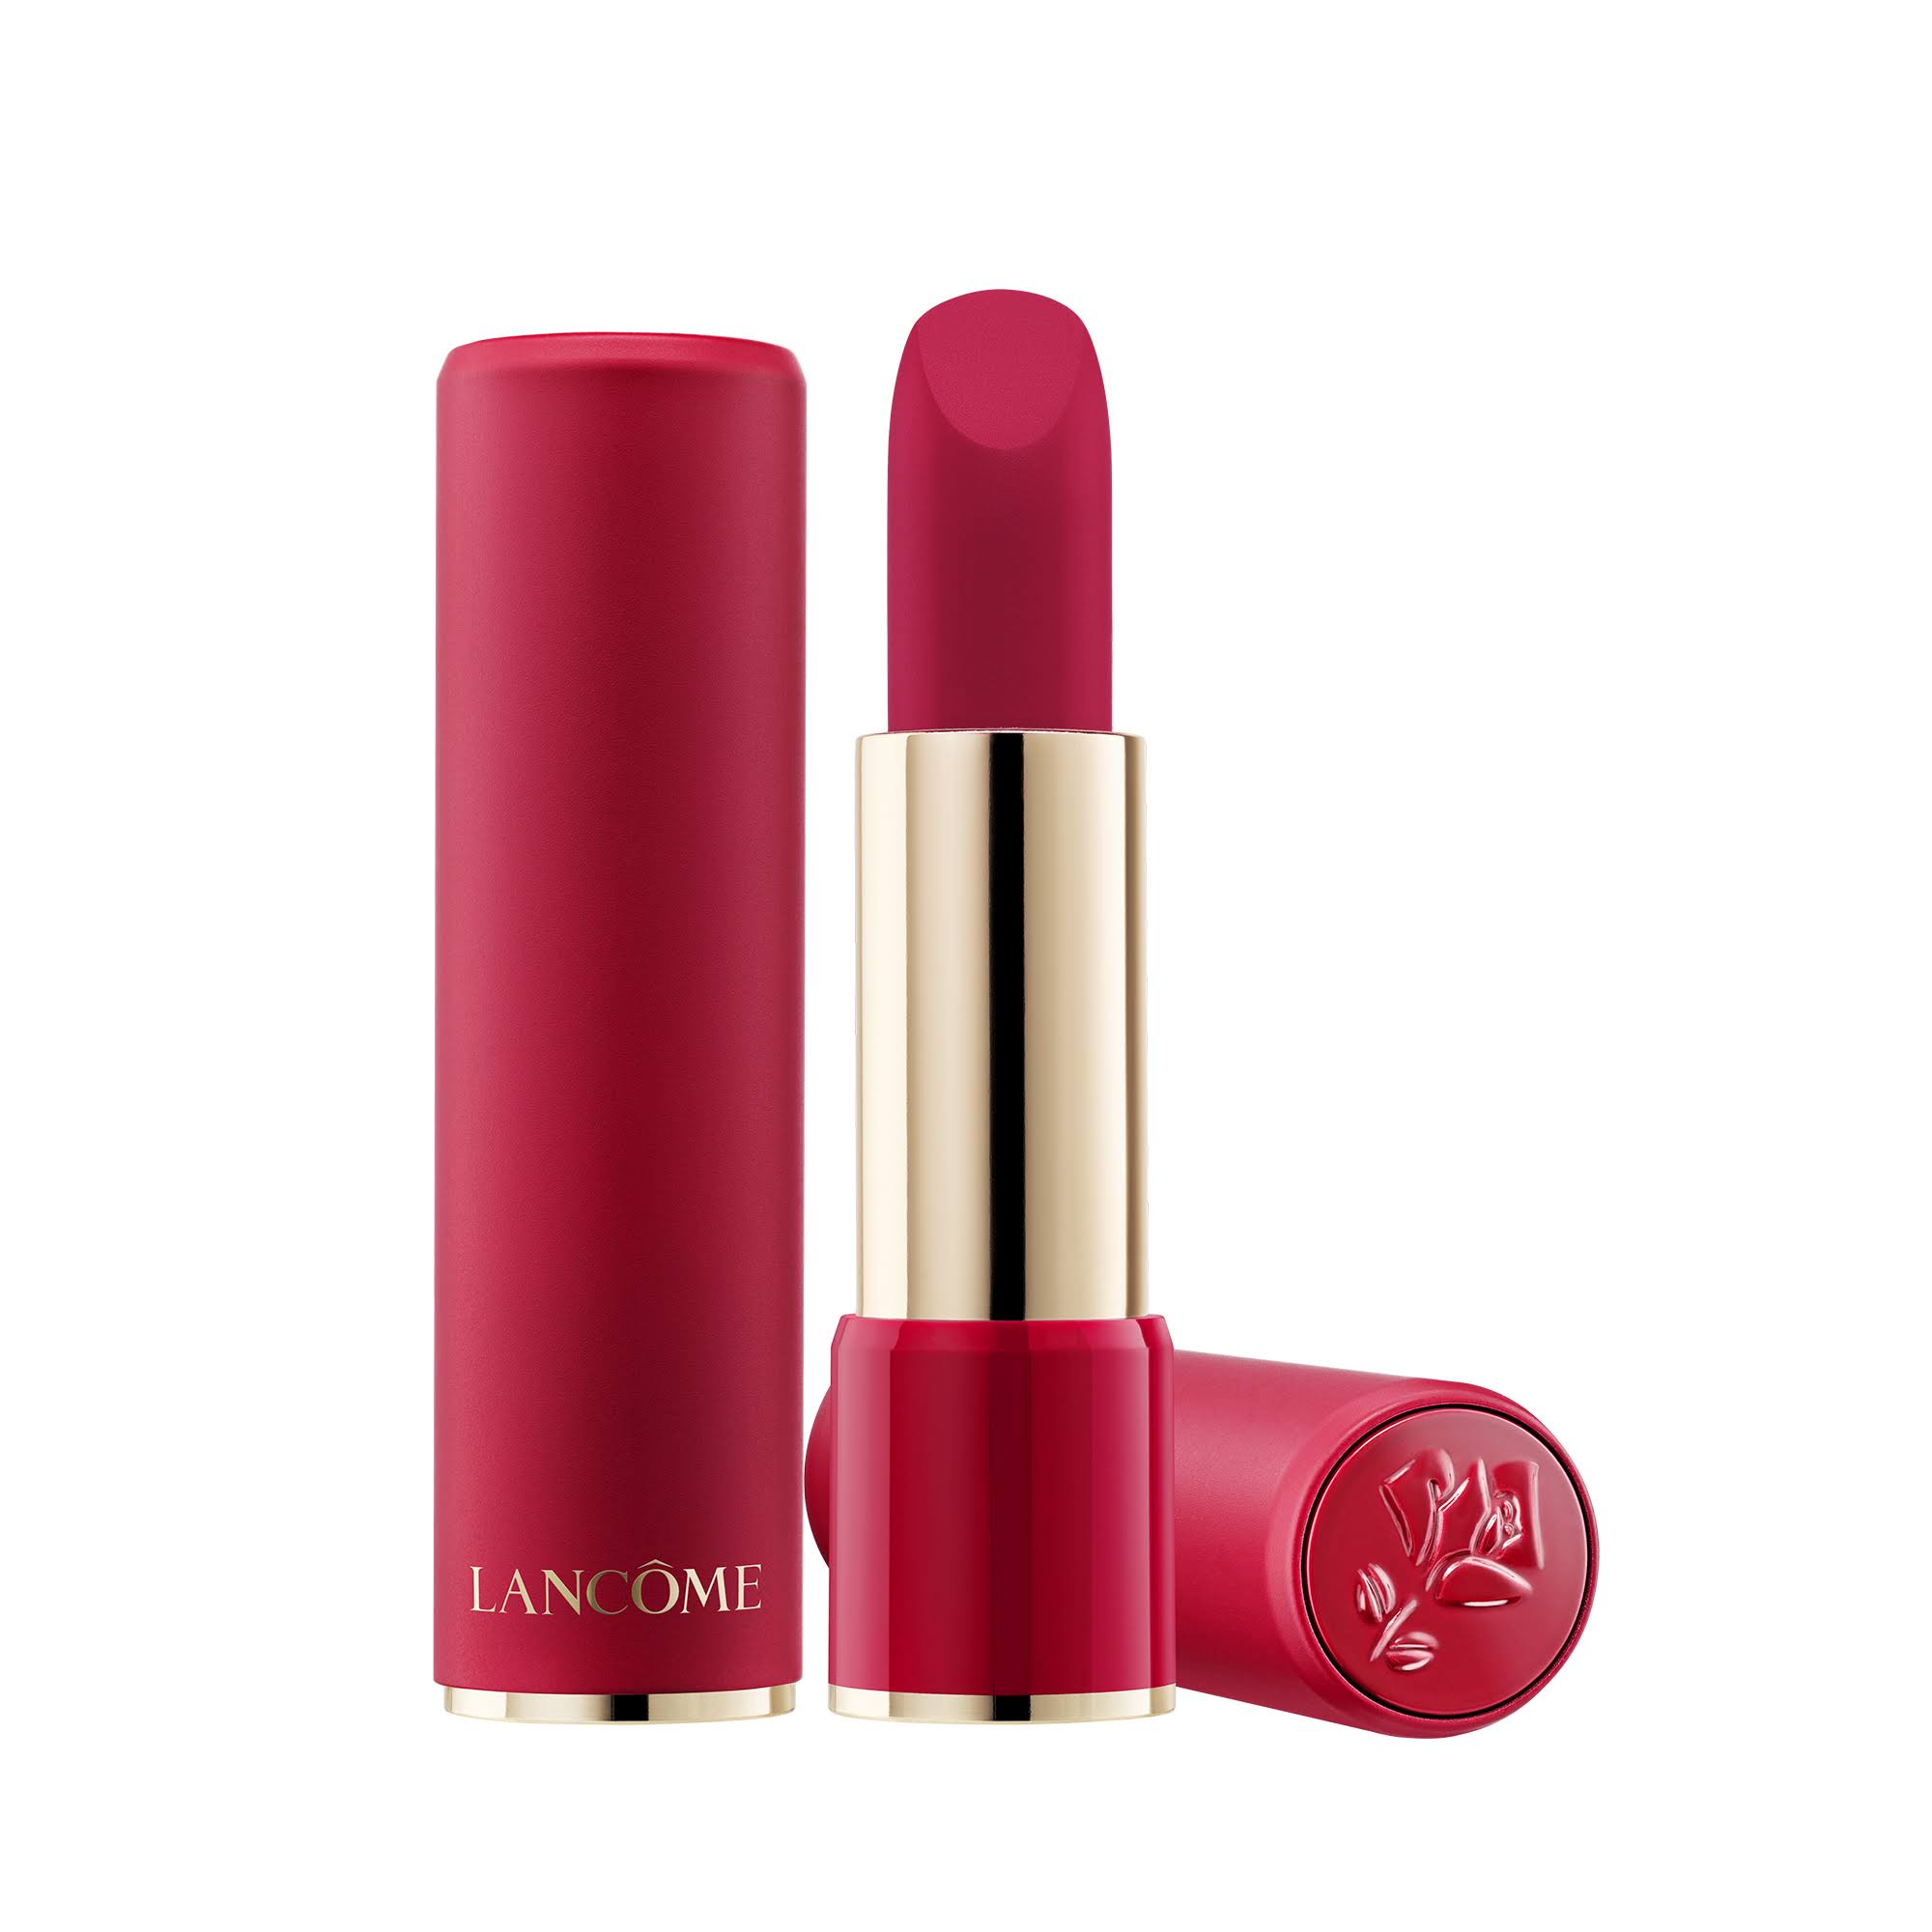 Lancome L'absolu Rouge Drama Matte Lipstick - 388 Rose Limited Edition, 3.4g